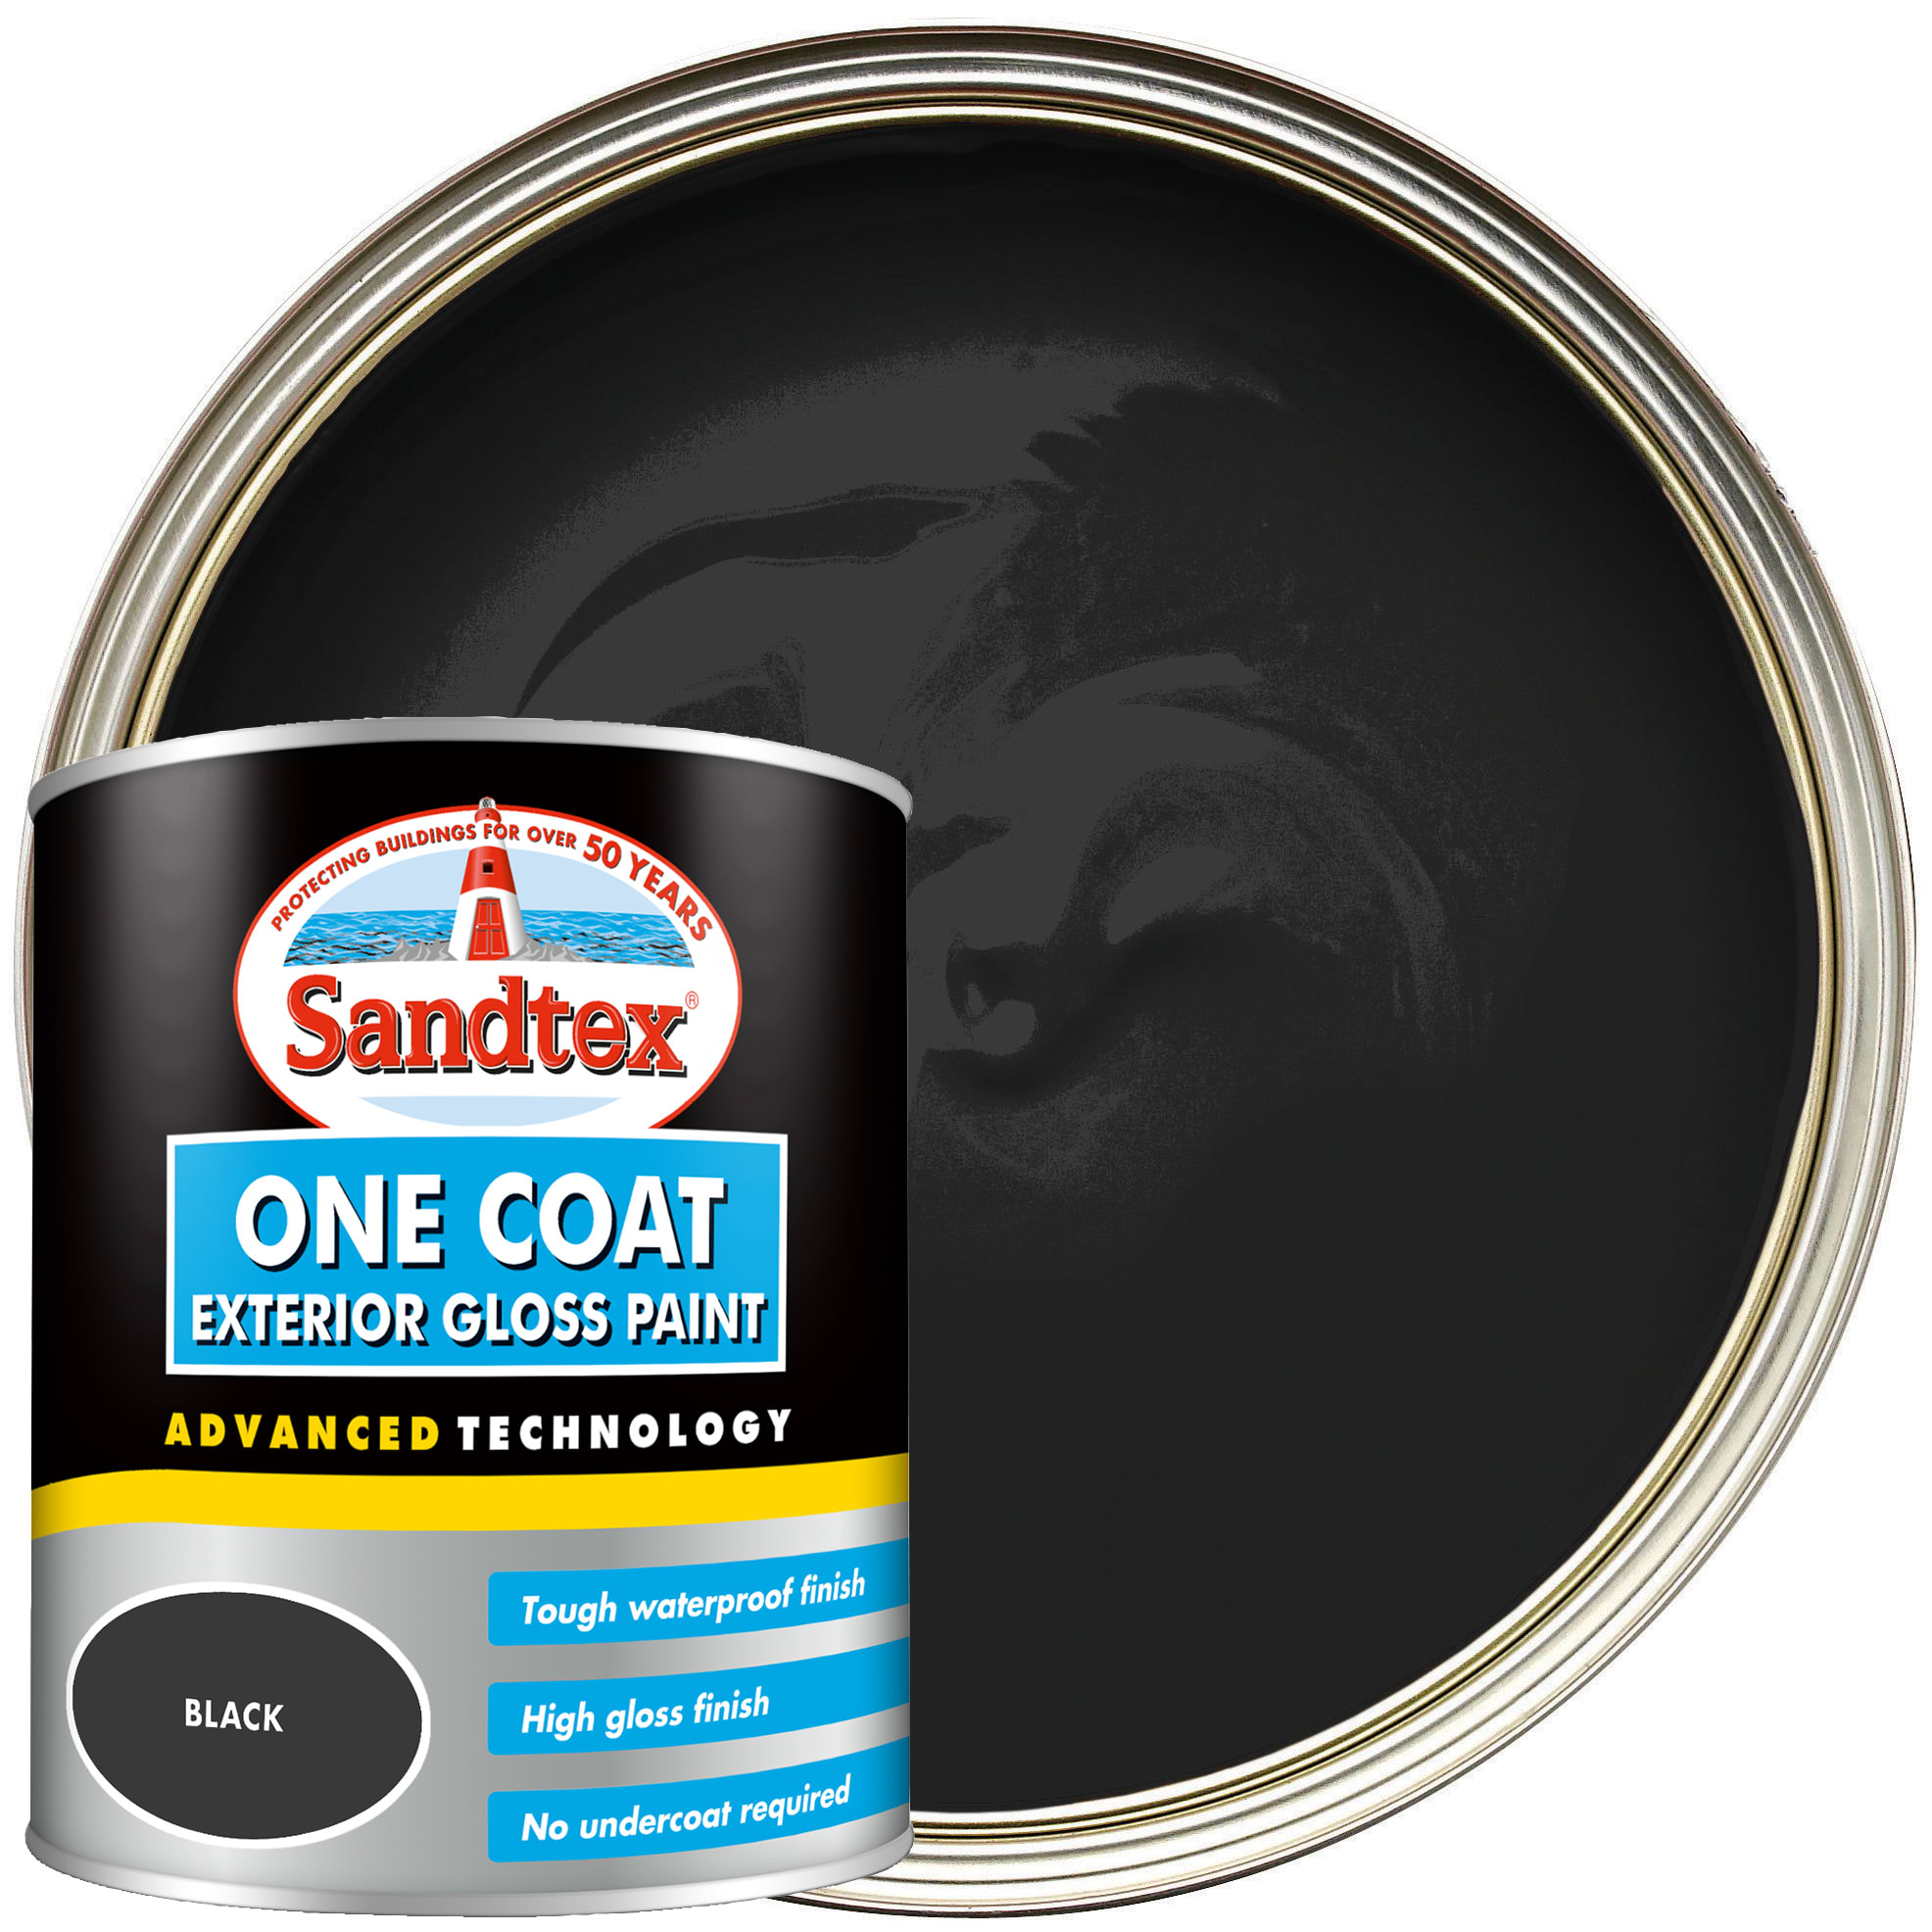 Sandtex One Coat Exterior Gloss Paint - Black